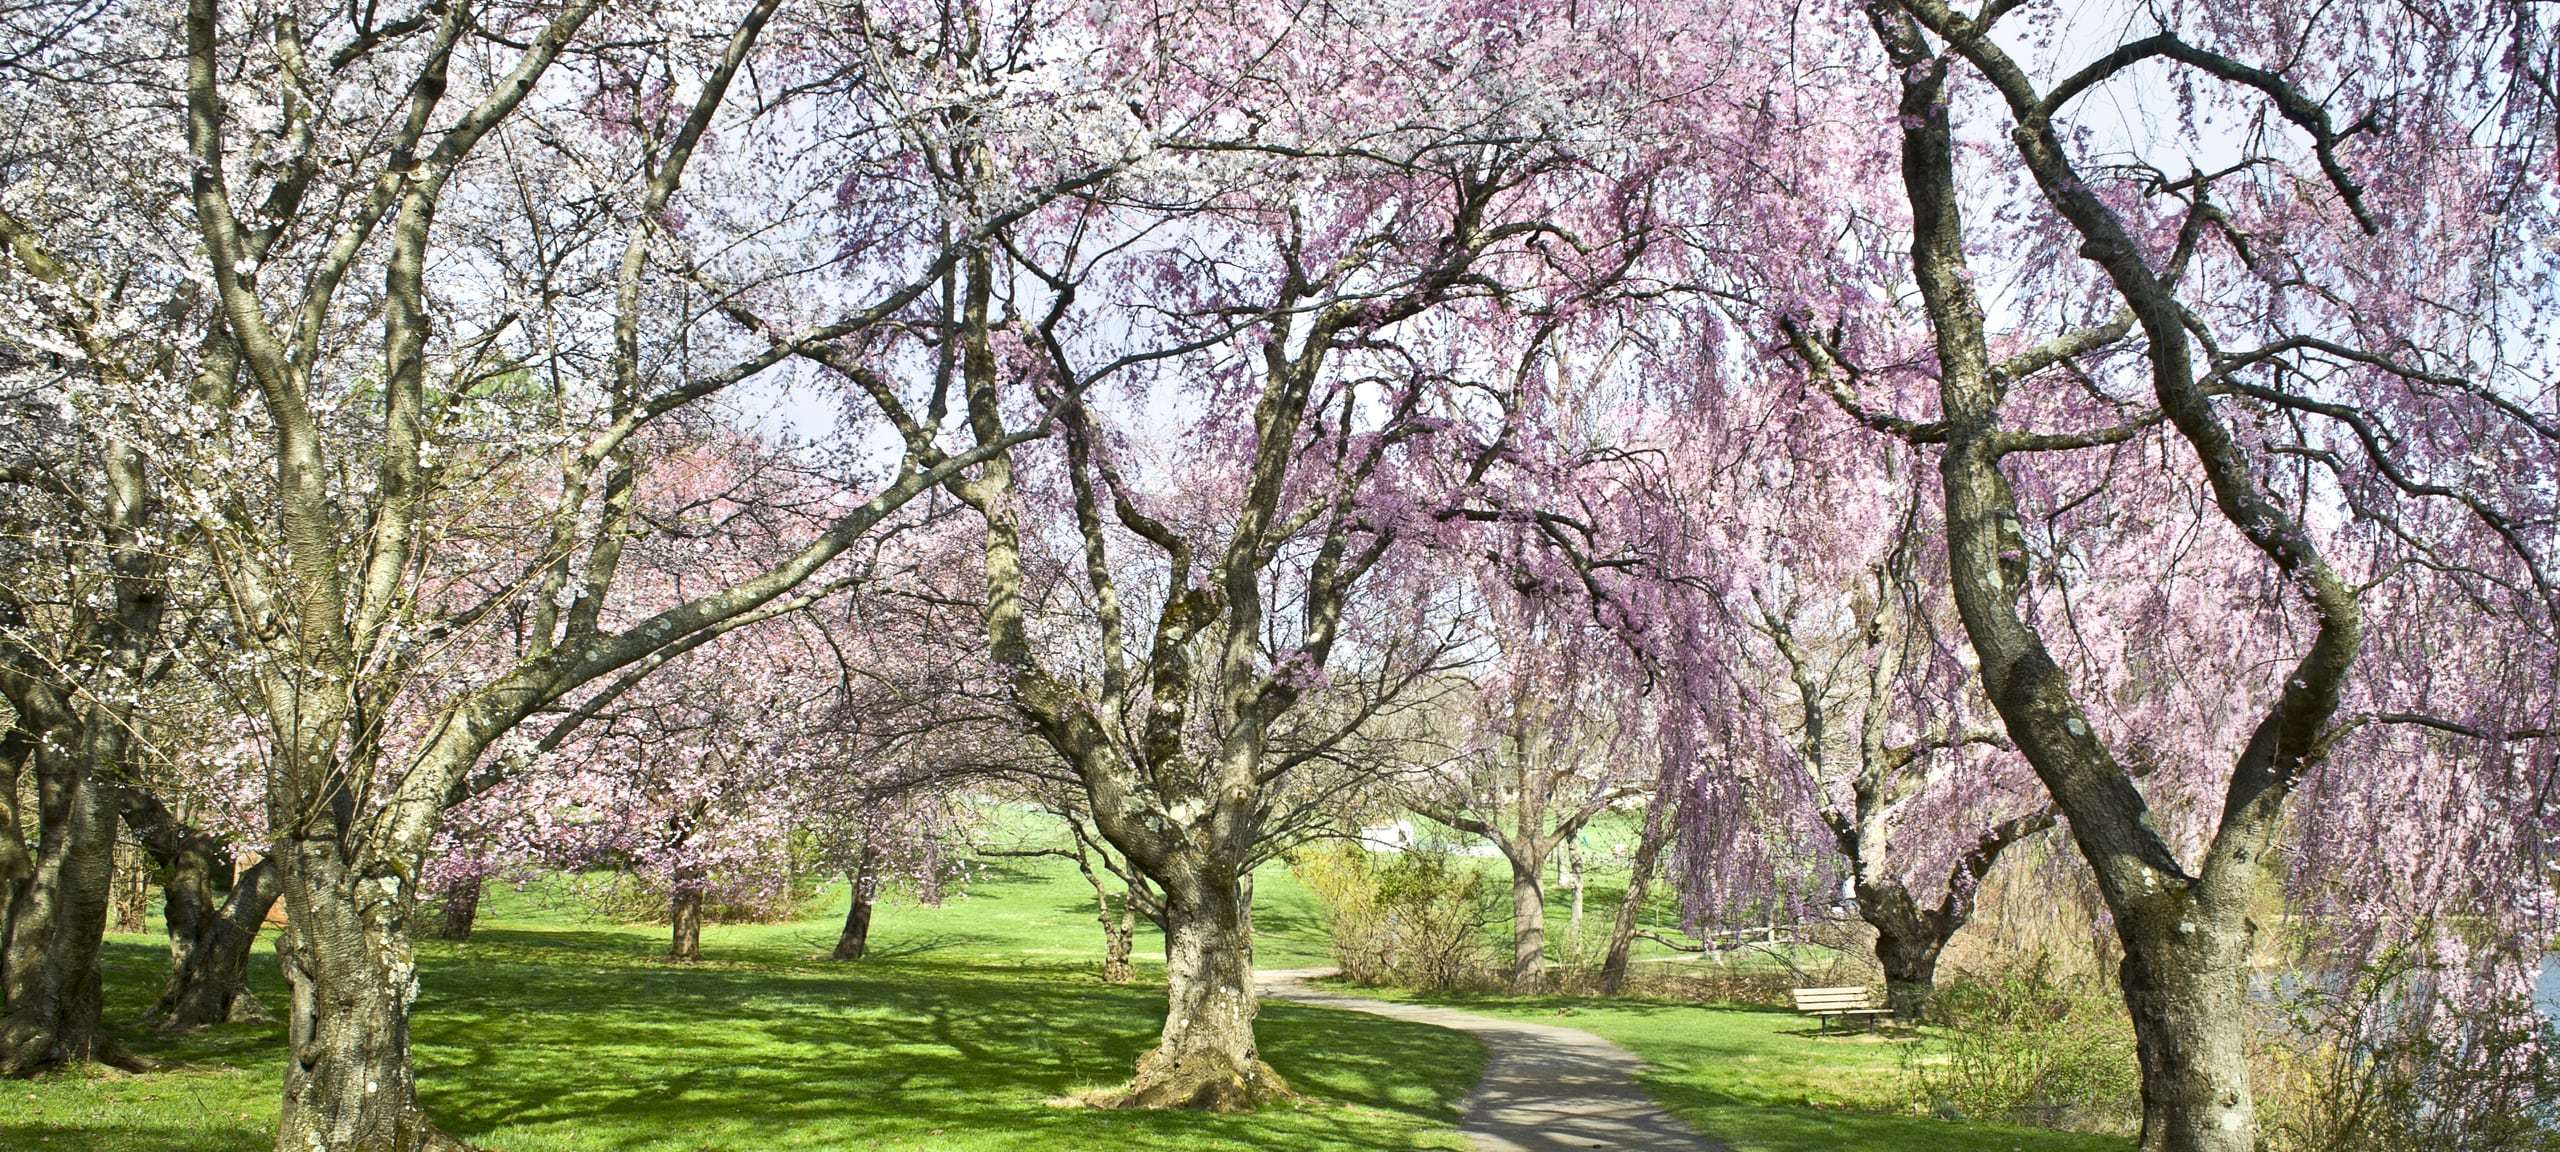 Spring flowers on trees in Holmdel Park, Holmdel